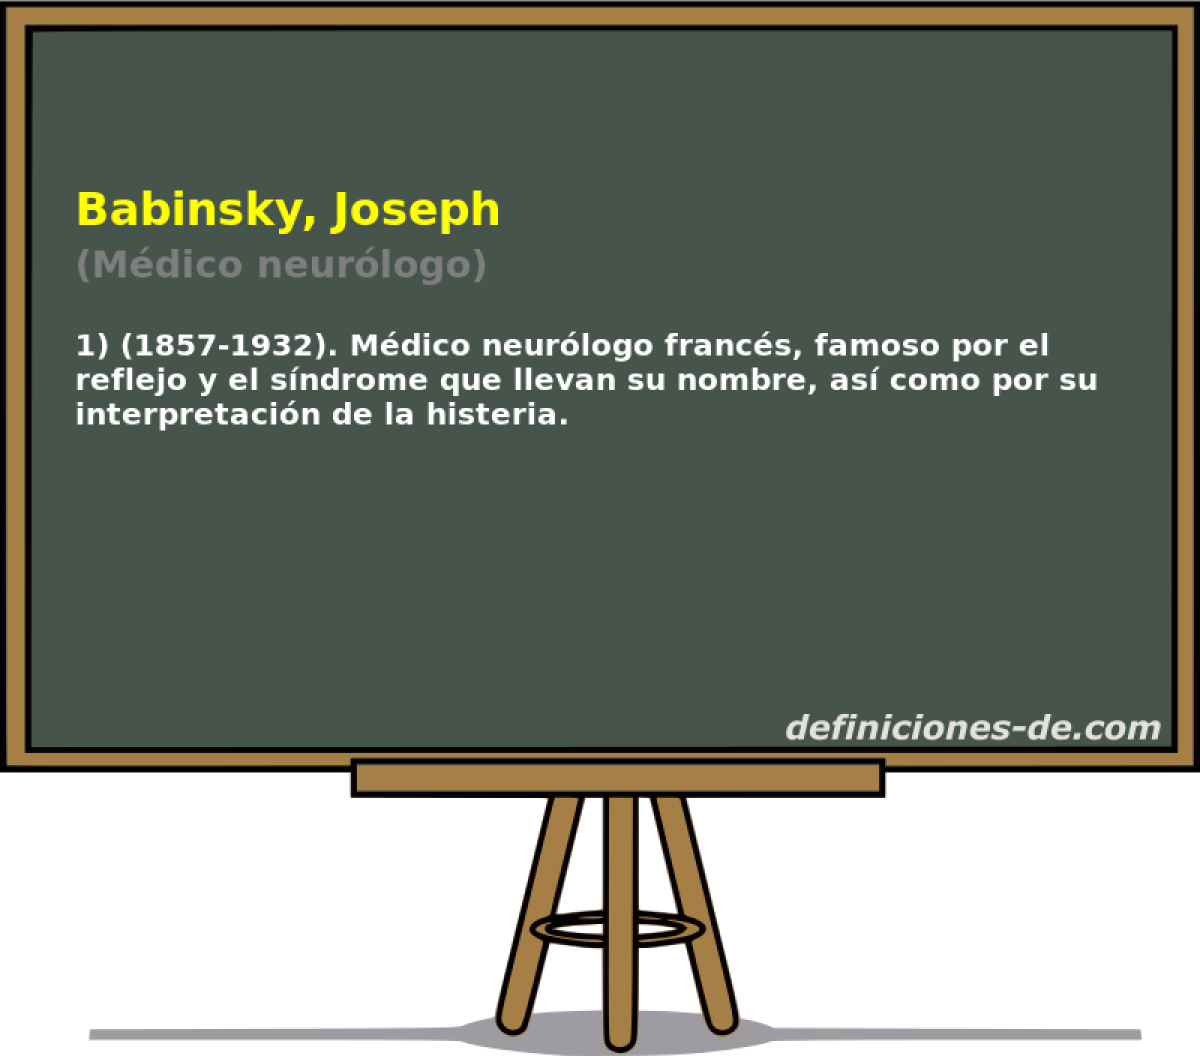 Babinsky, Joseph (Mdico neurlogo)